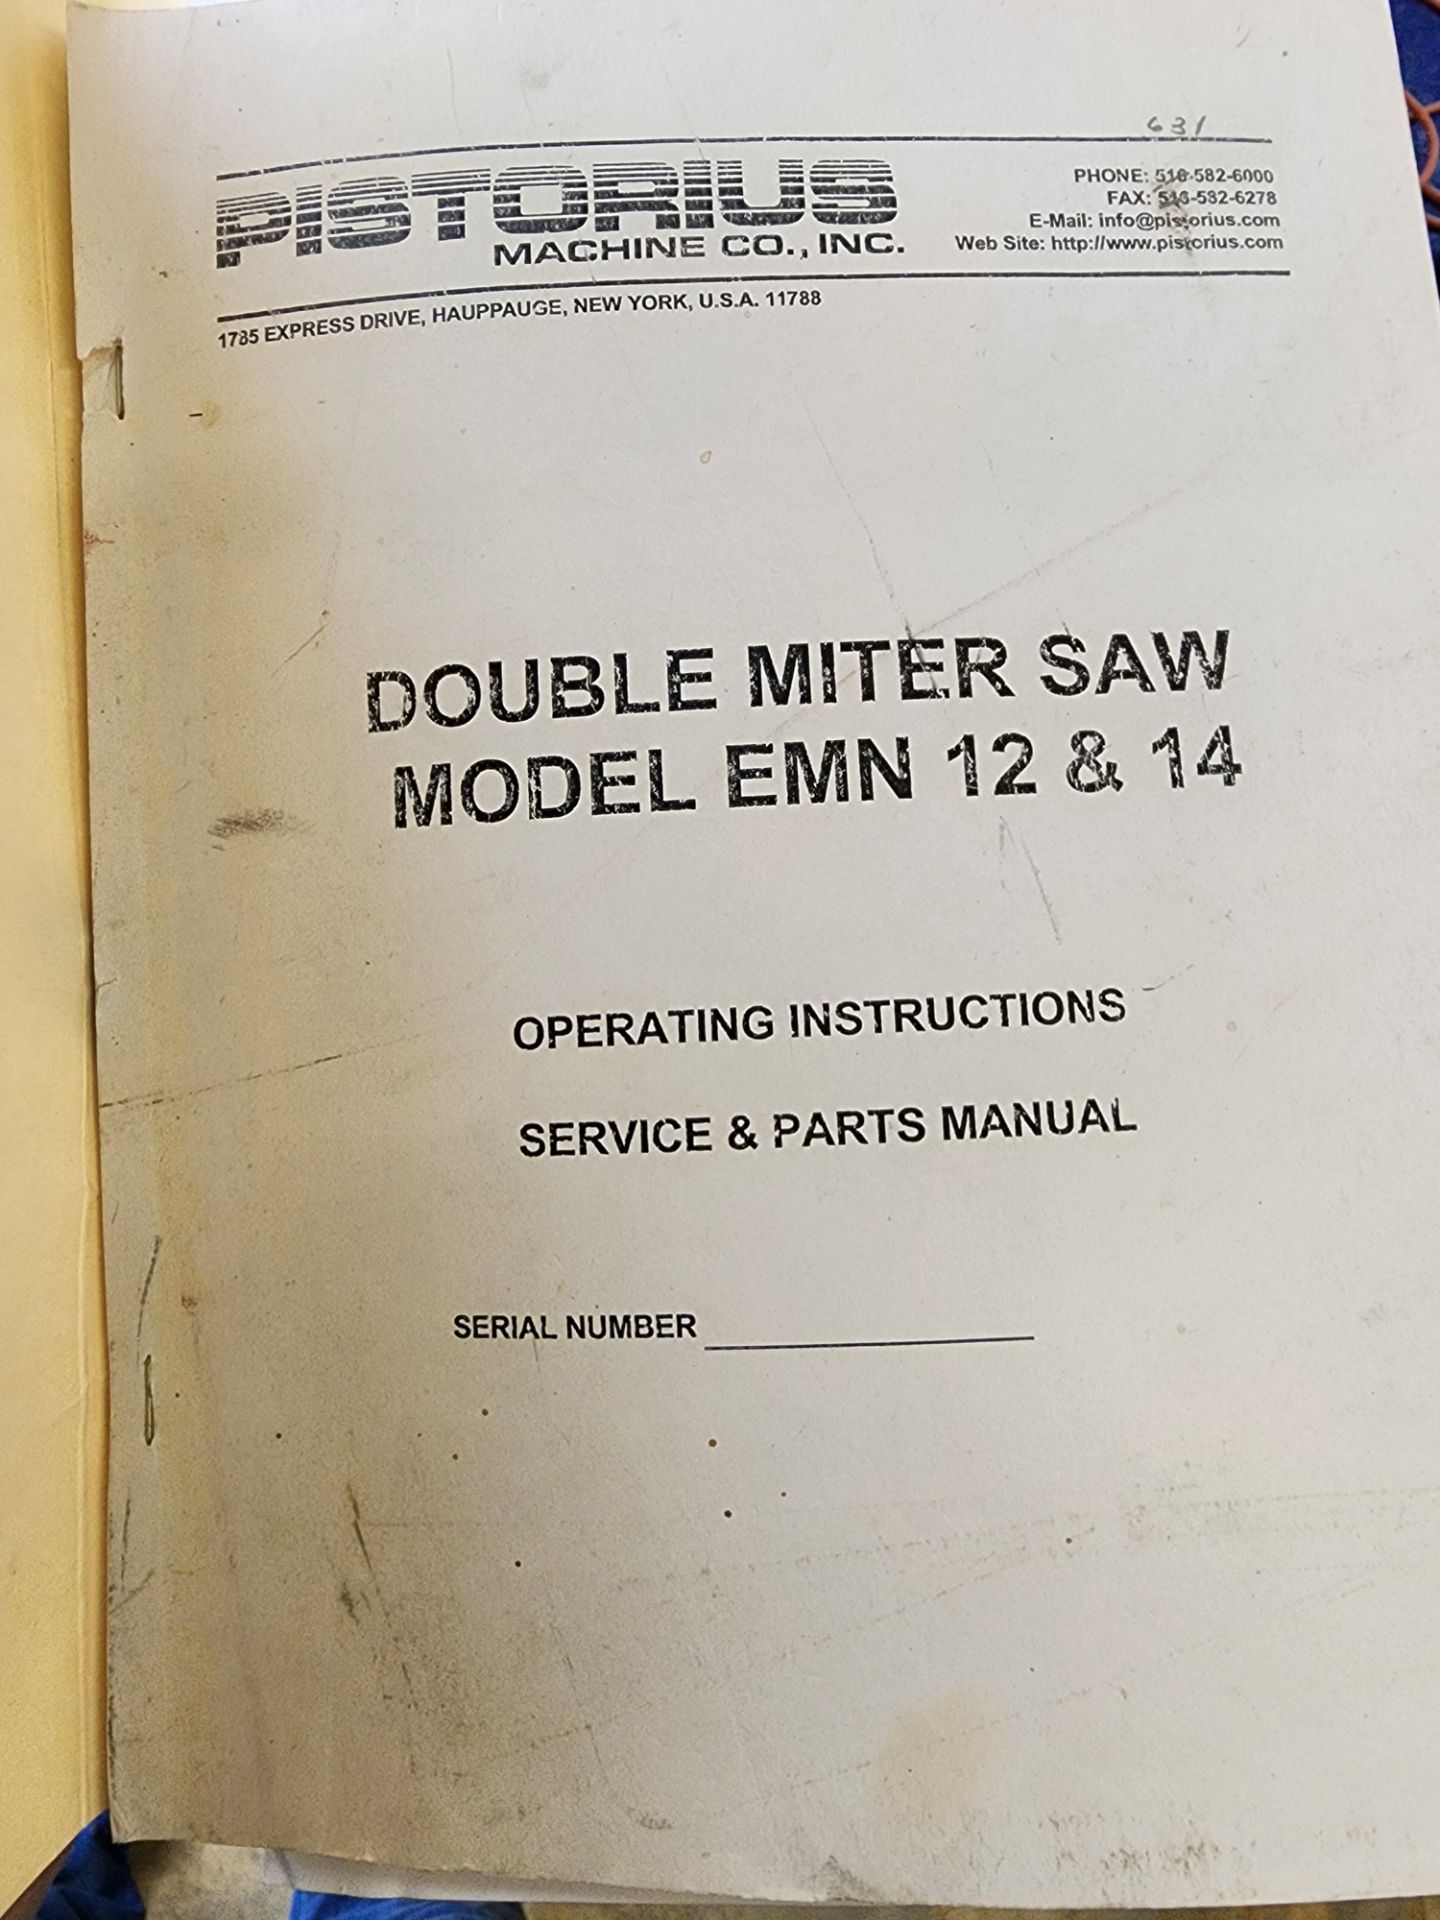 Pistorius Model EMN-14 Double Miter Saw - Image 10 of 10